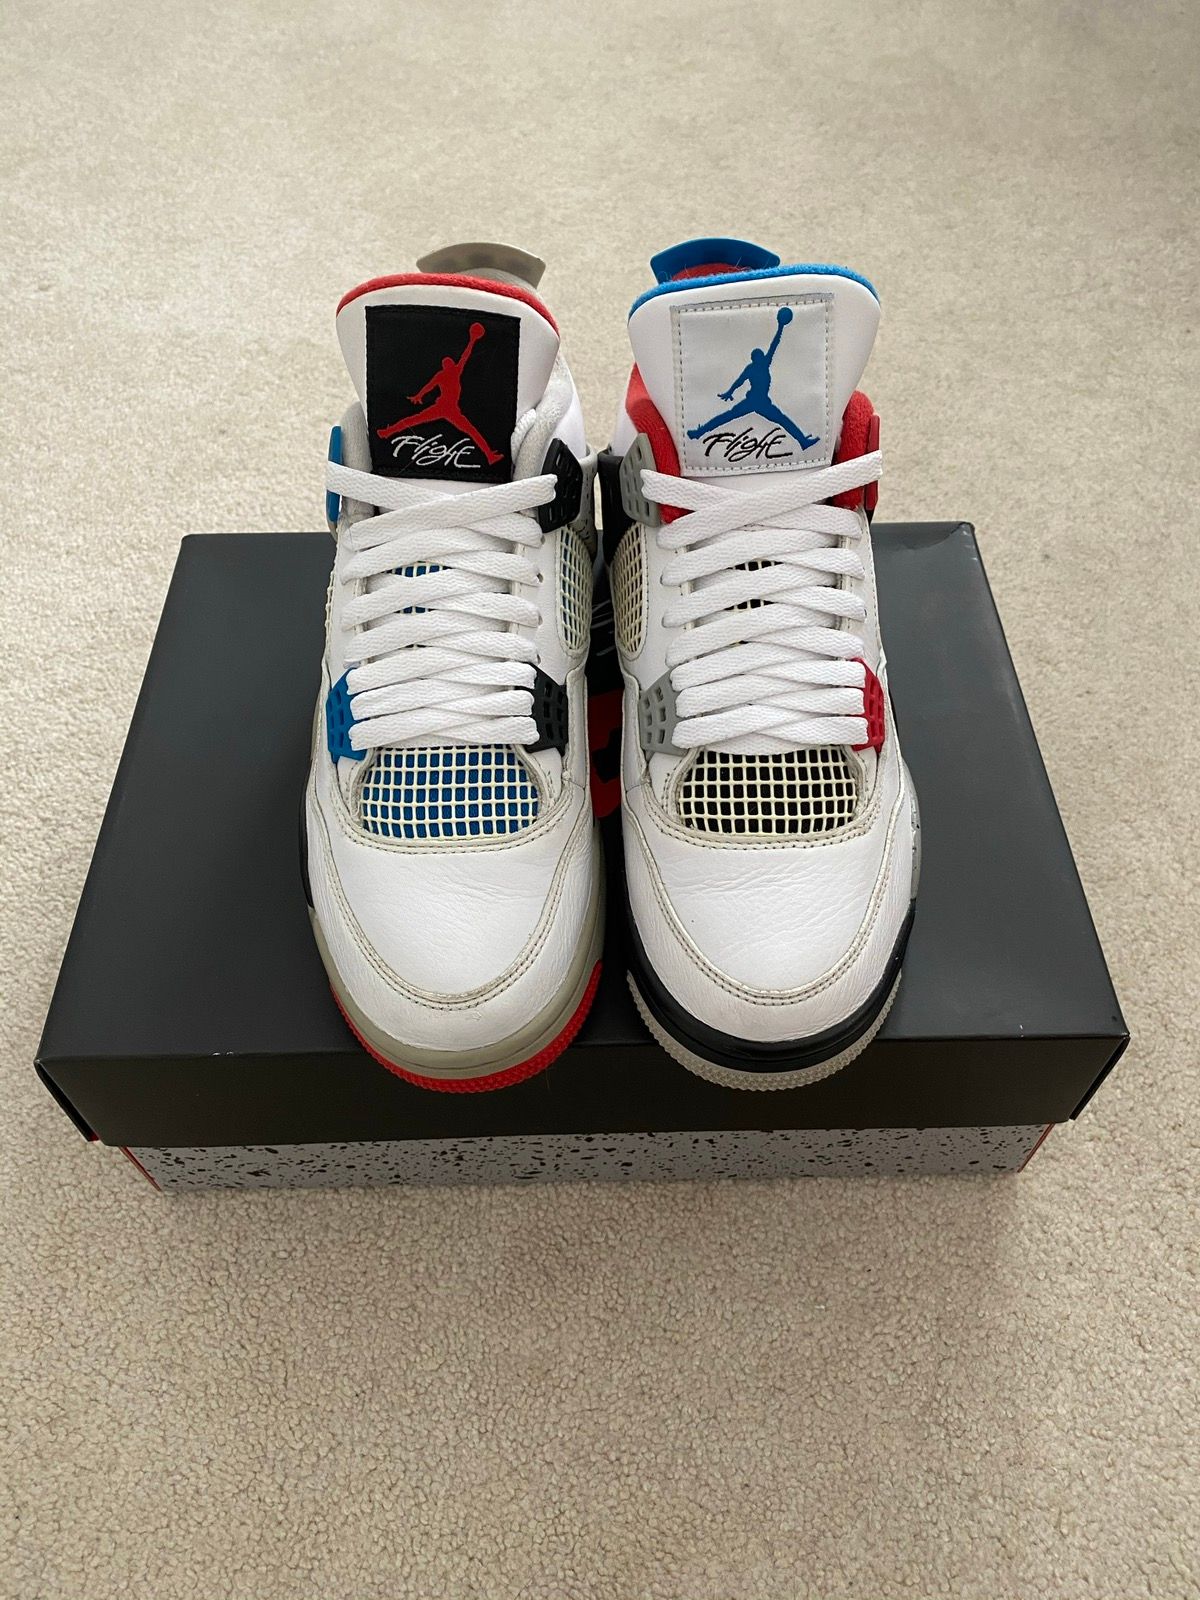 Pre-owned Jordan Brand Air Jordan 4 What The 2019 Shoes In White